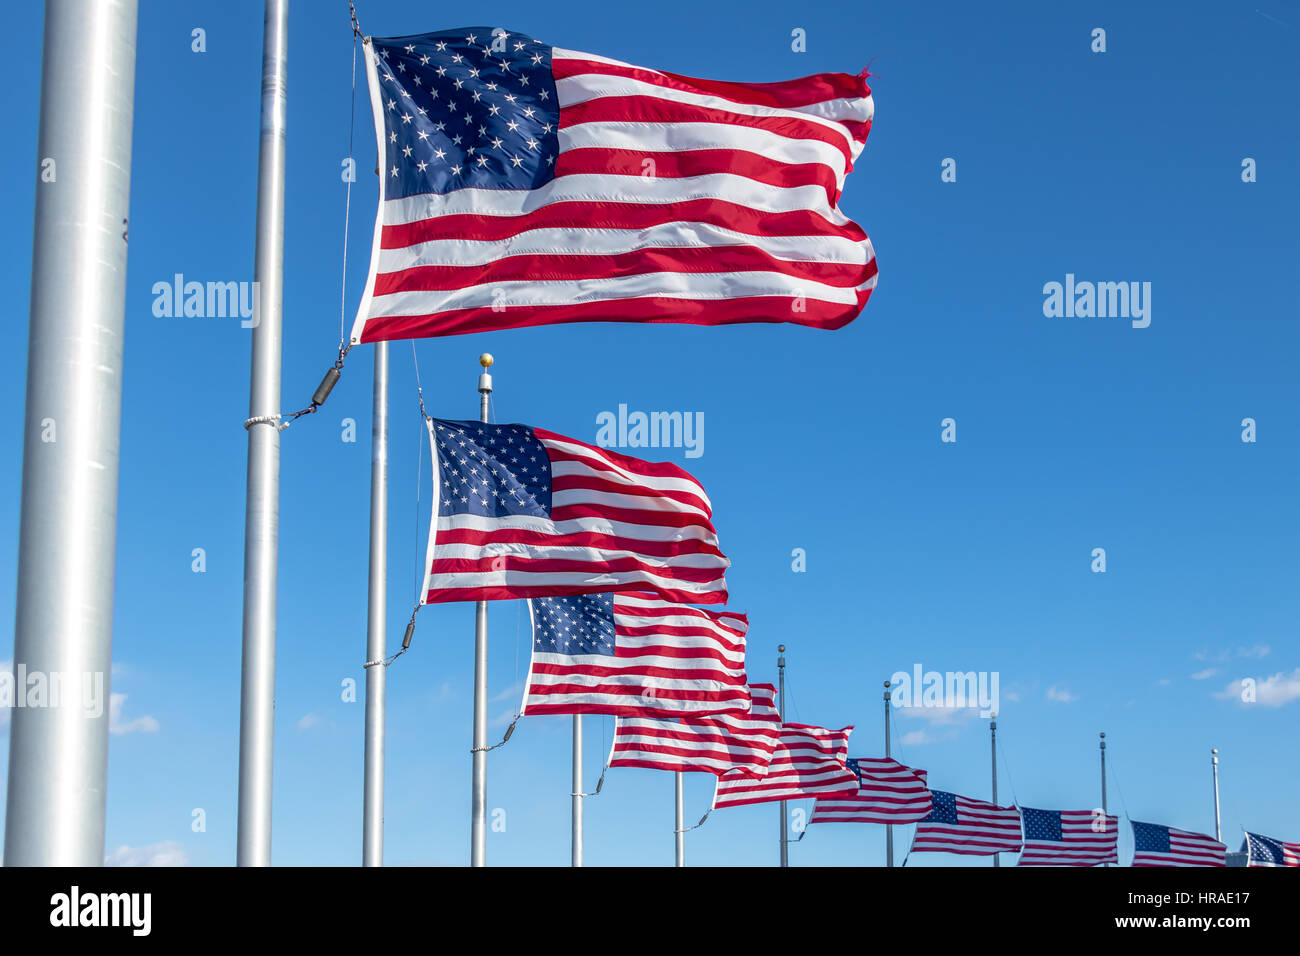 Many American Flags Waving at Washington Monument - Washington, D.C., USA Stock Photo